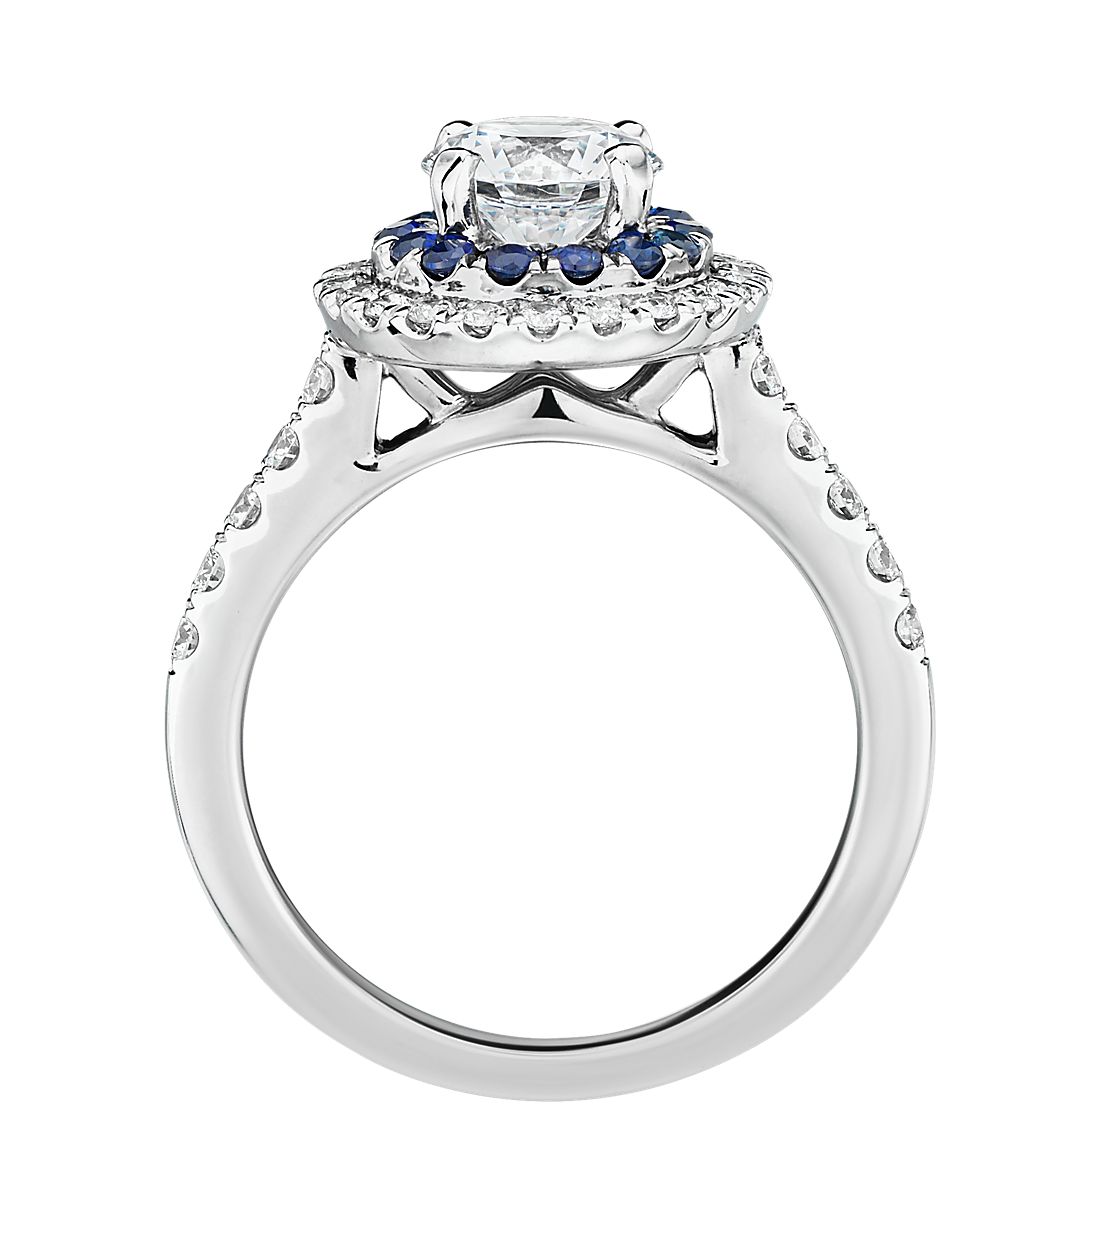 Sapphire and diamond hidden halo engagement ring.